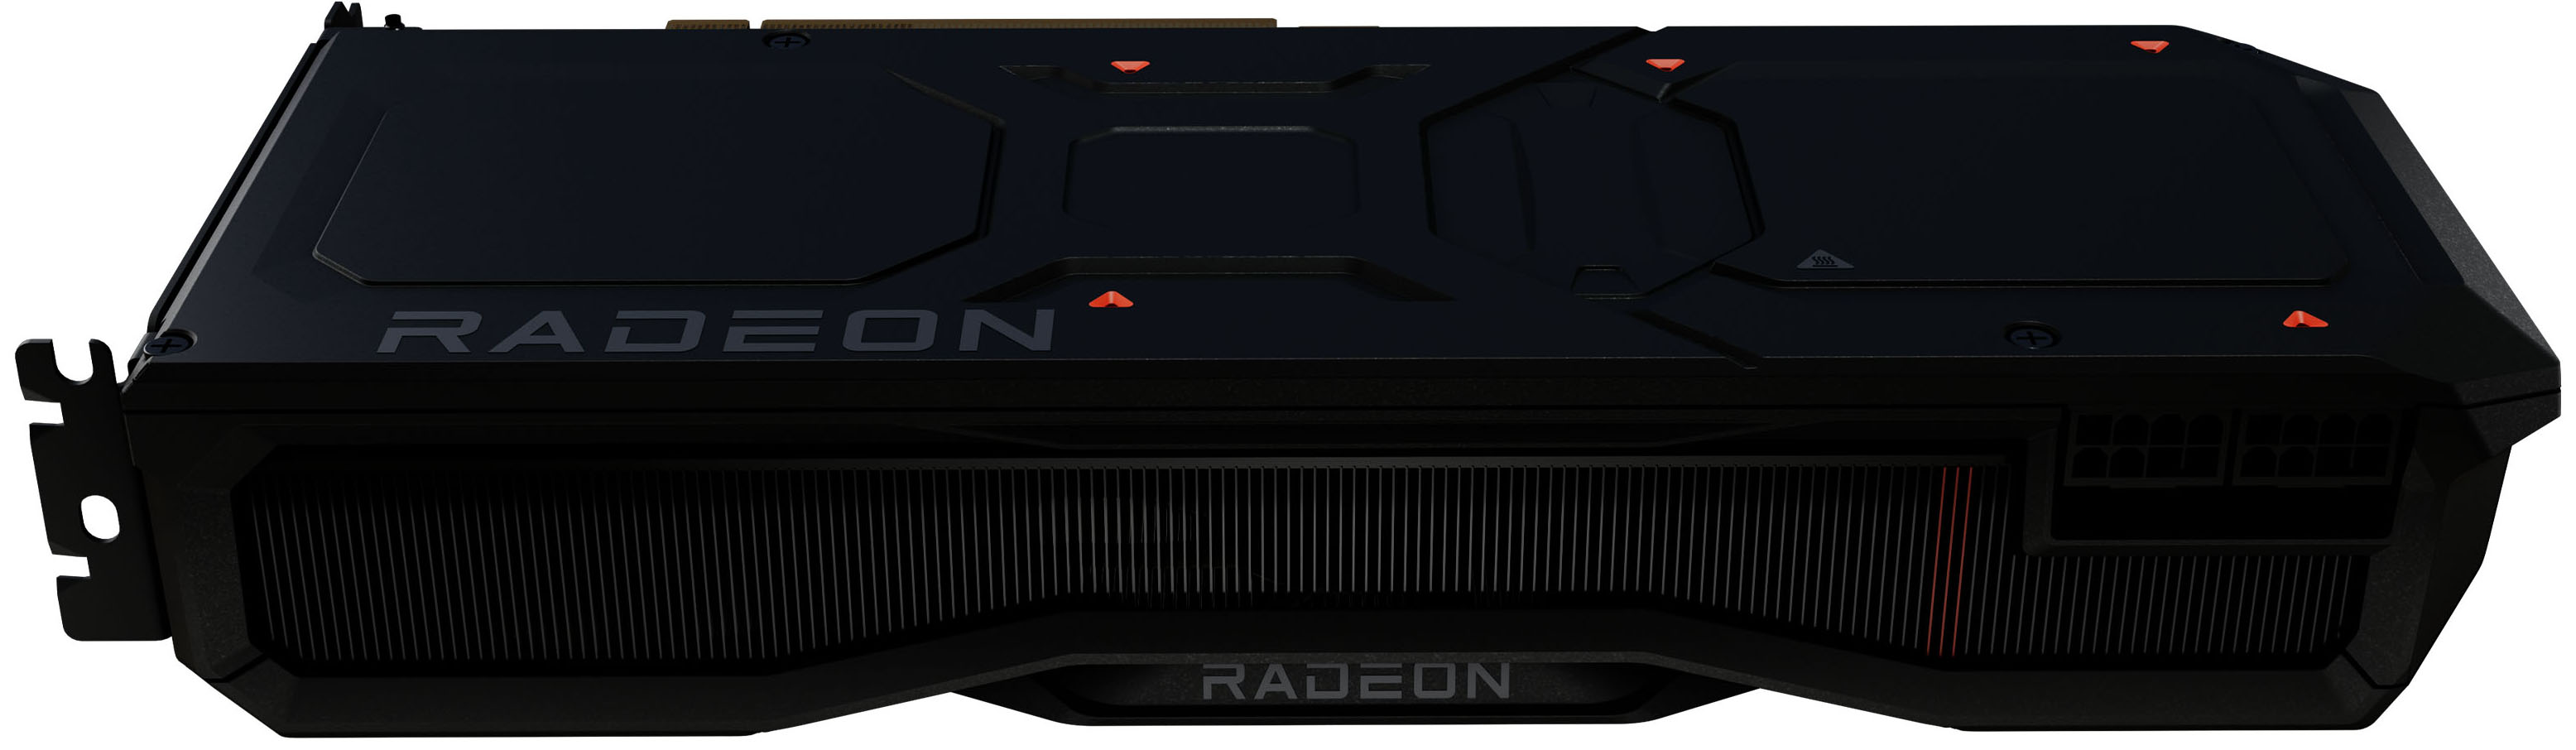 Sapphire - Gráfica Sapphire Radeon RX 7900 XT Gaming 20GB GDDR6